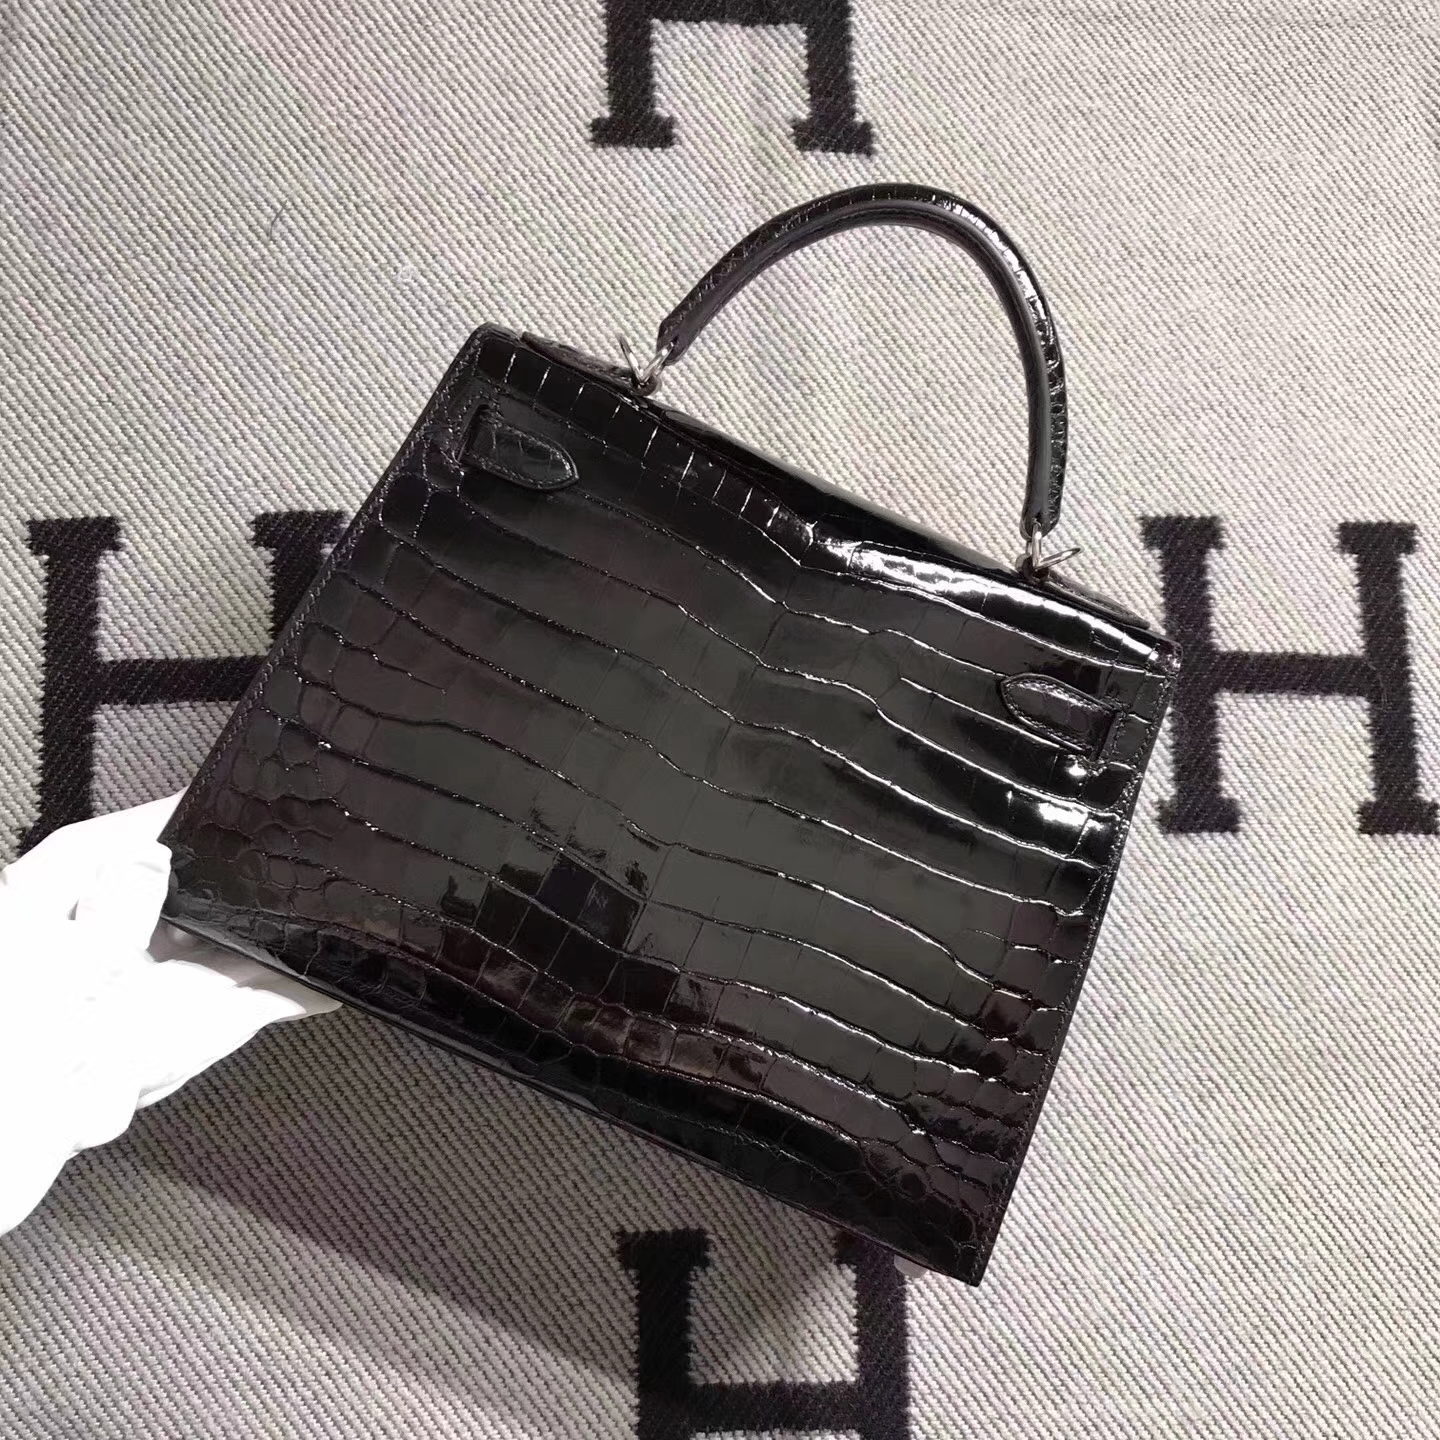 Luxury Hermes Kelly Tote Bag CK89 Black Crocodile Leather Silver Hardware